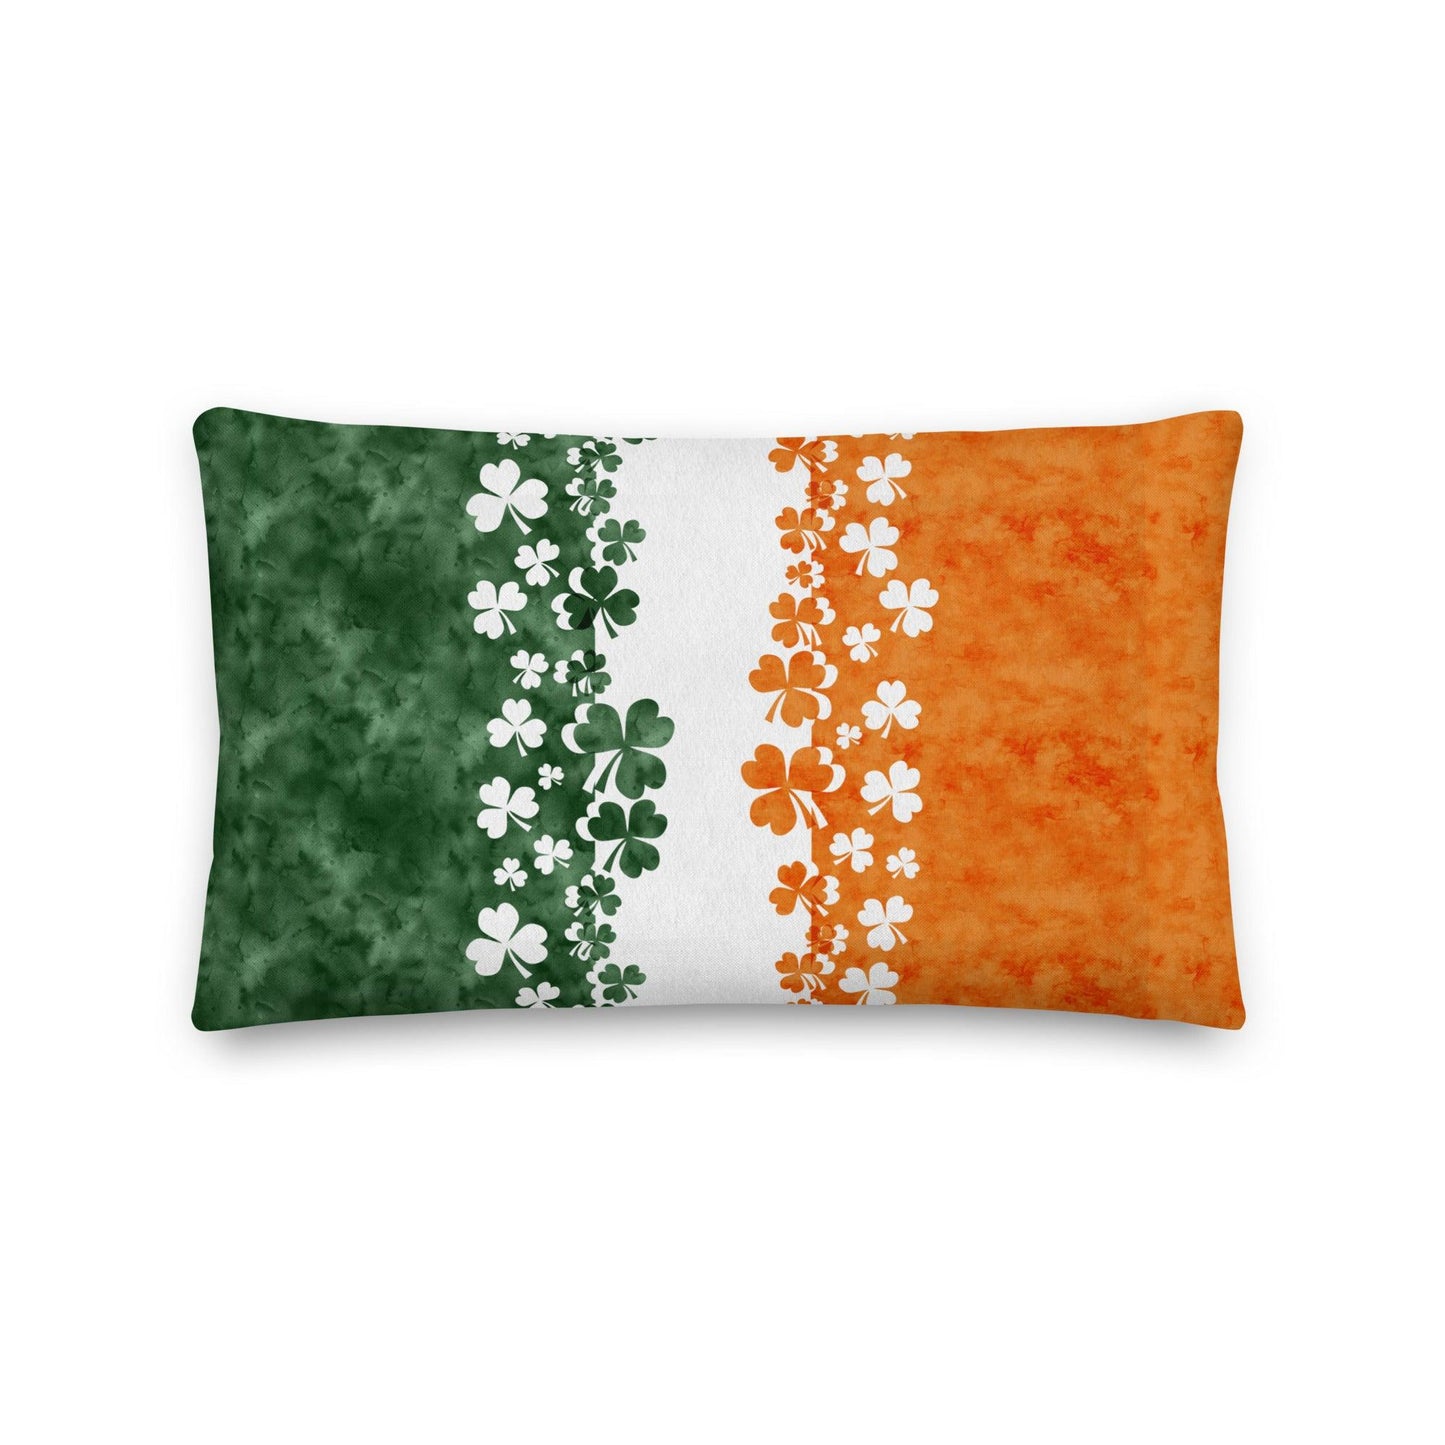 Irish Shamrock Throw Pillow - The Global Wanderer